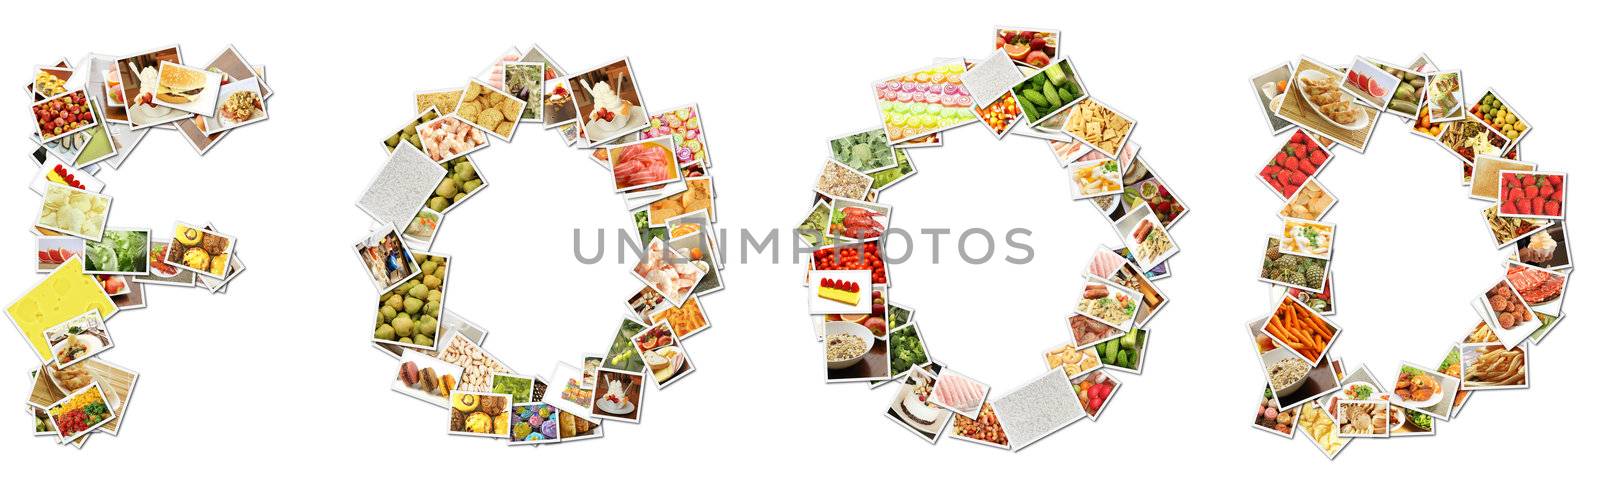 Food Menu Collage by kentoh